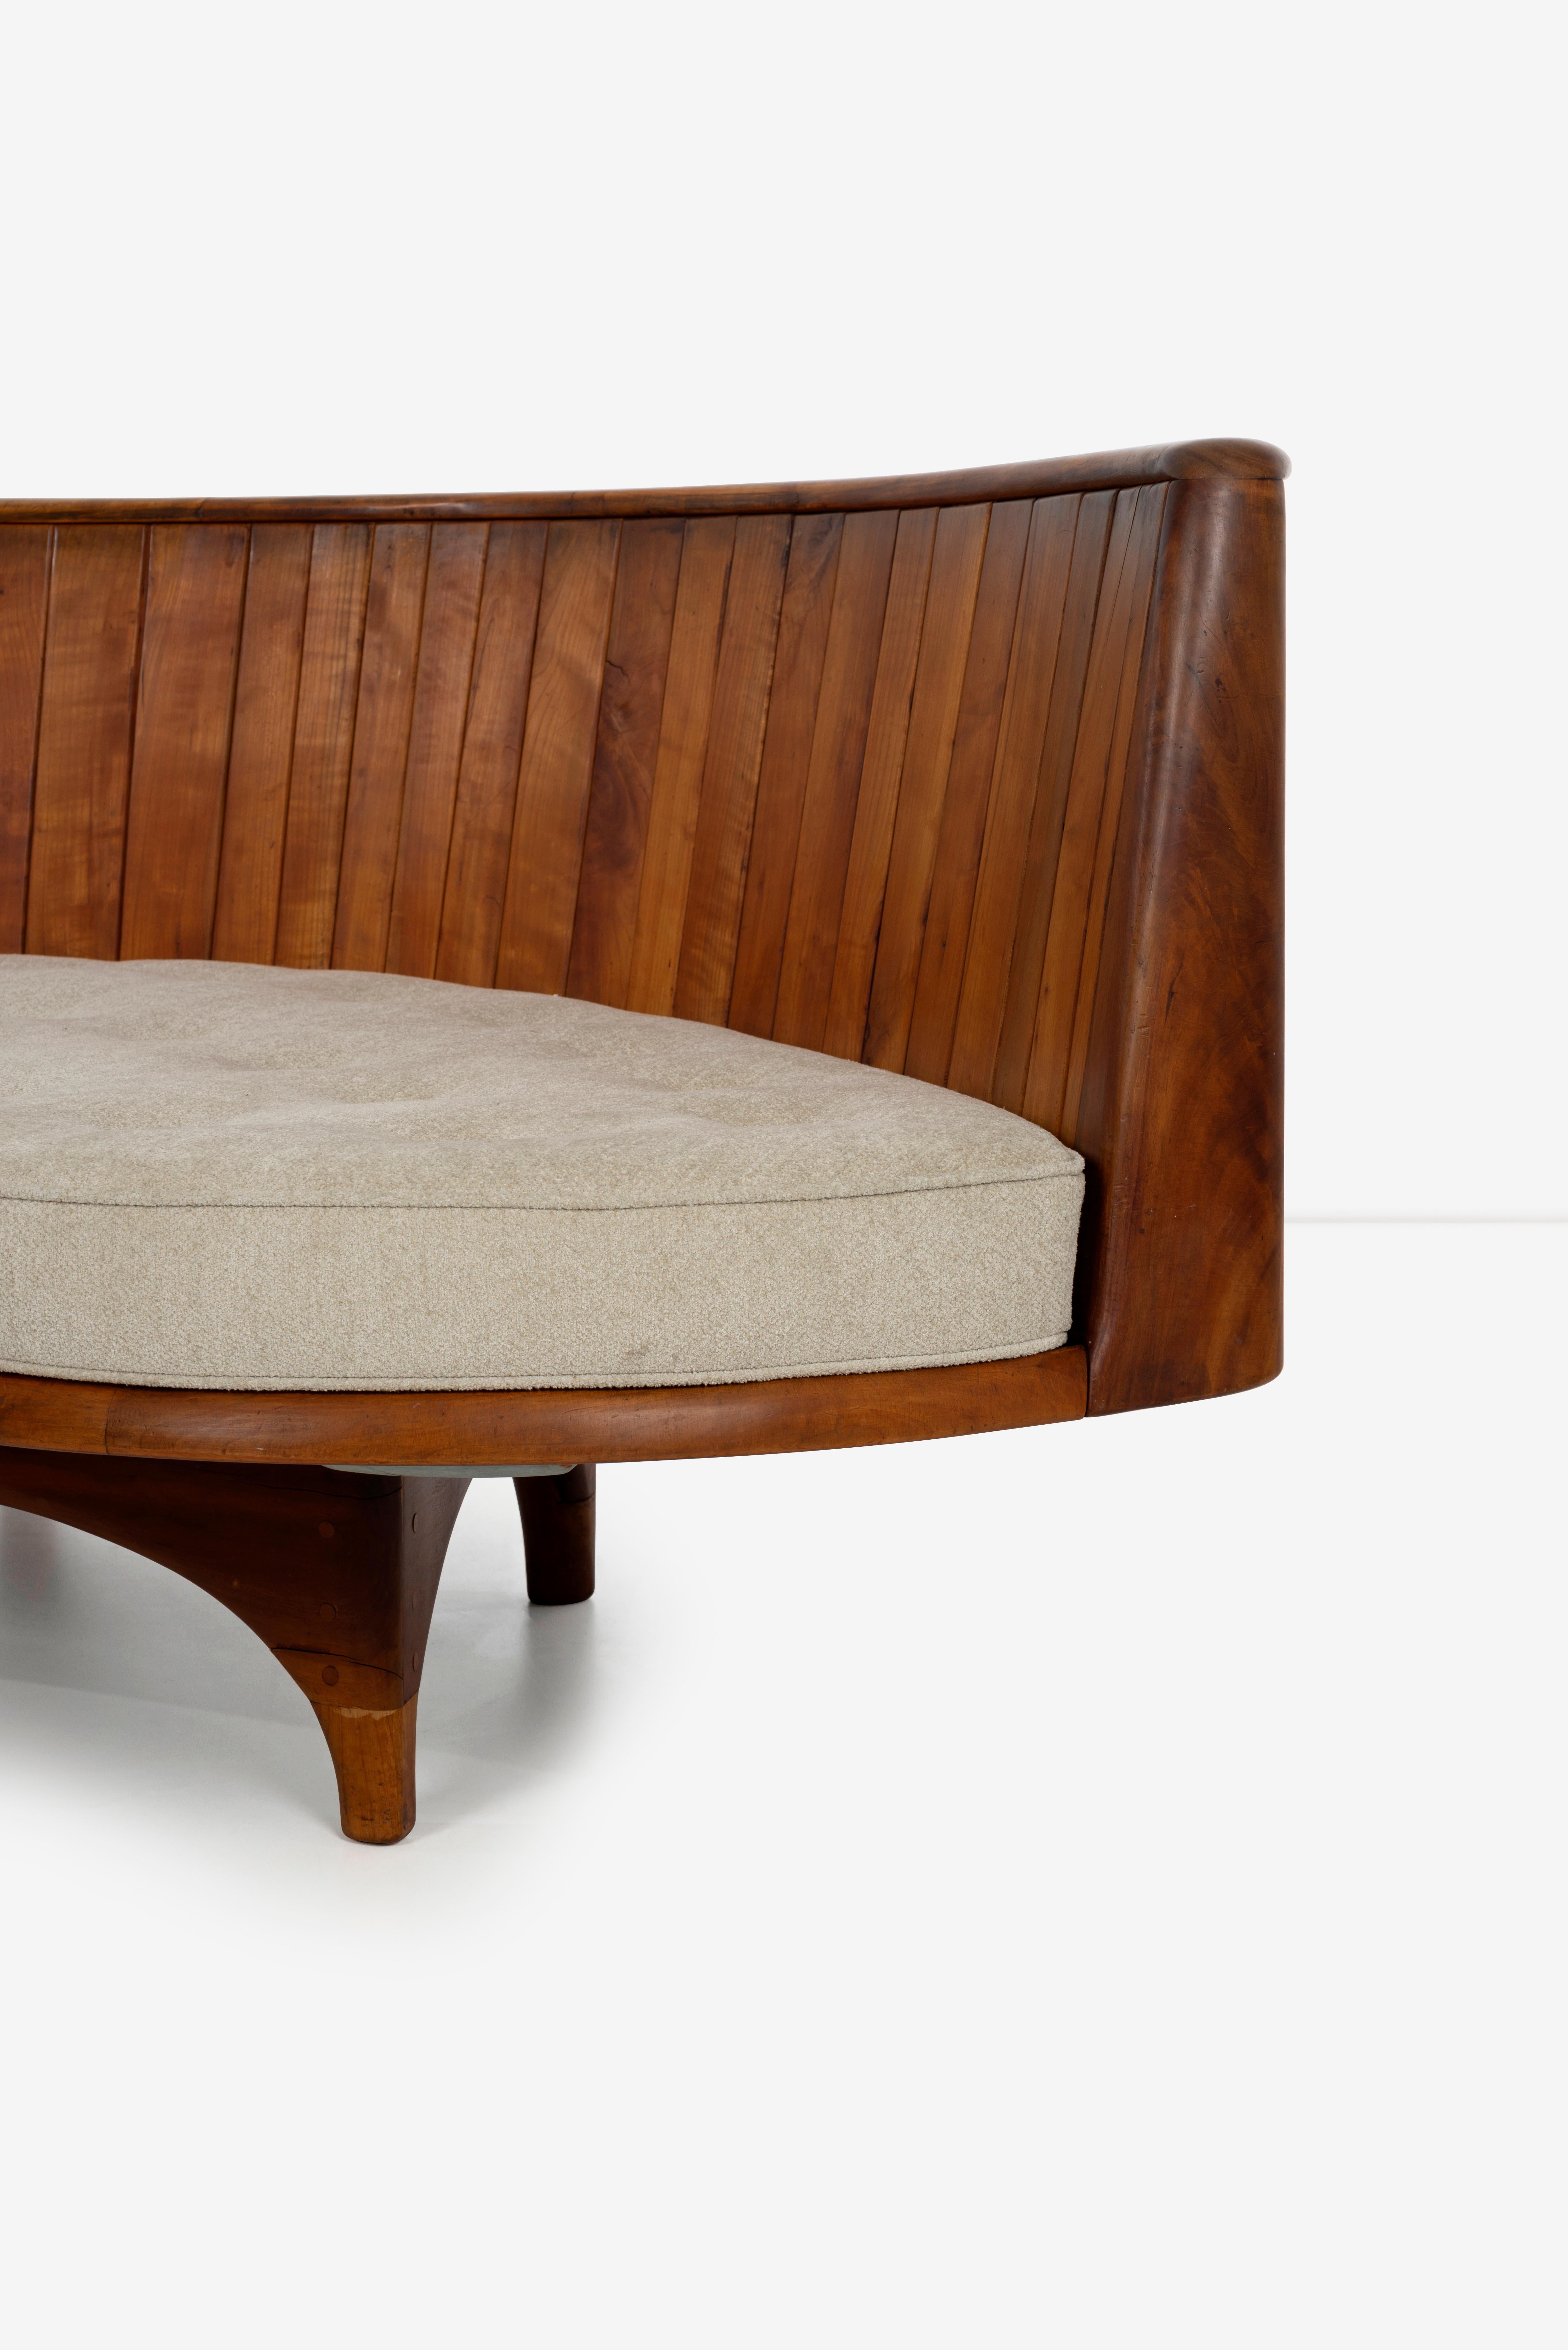 Mid-20th Century Wharton Esherick Important Sofa For Sale